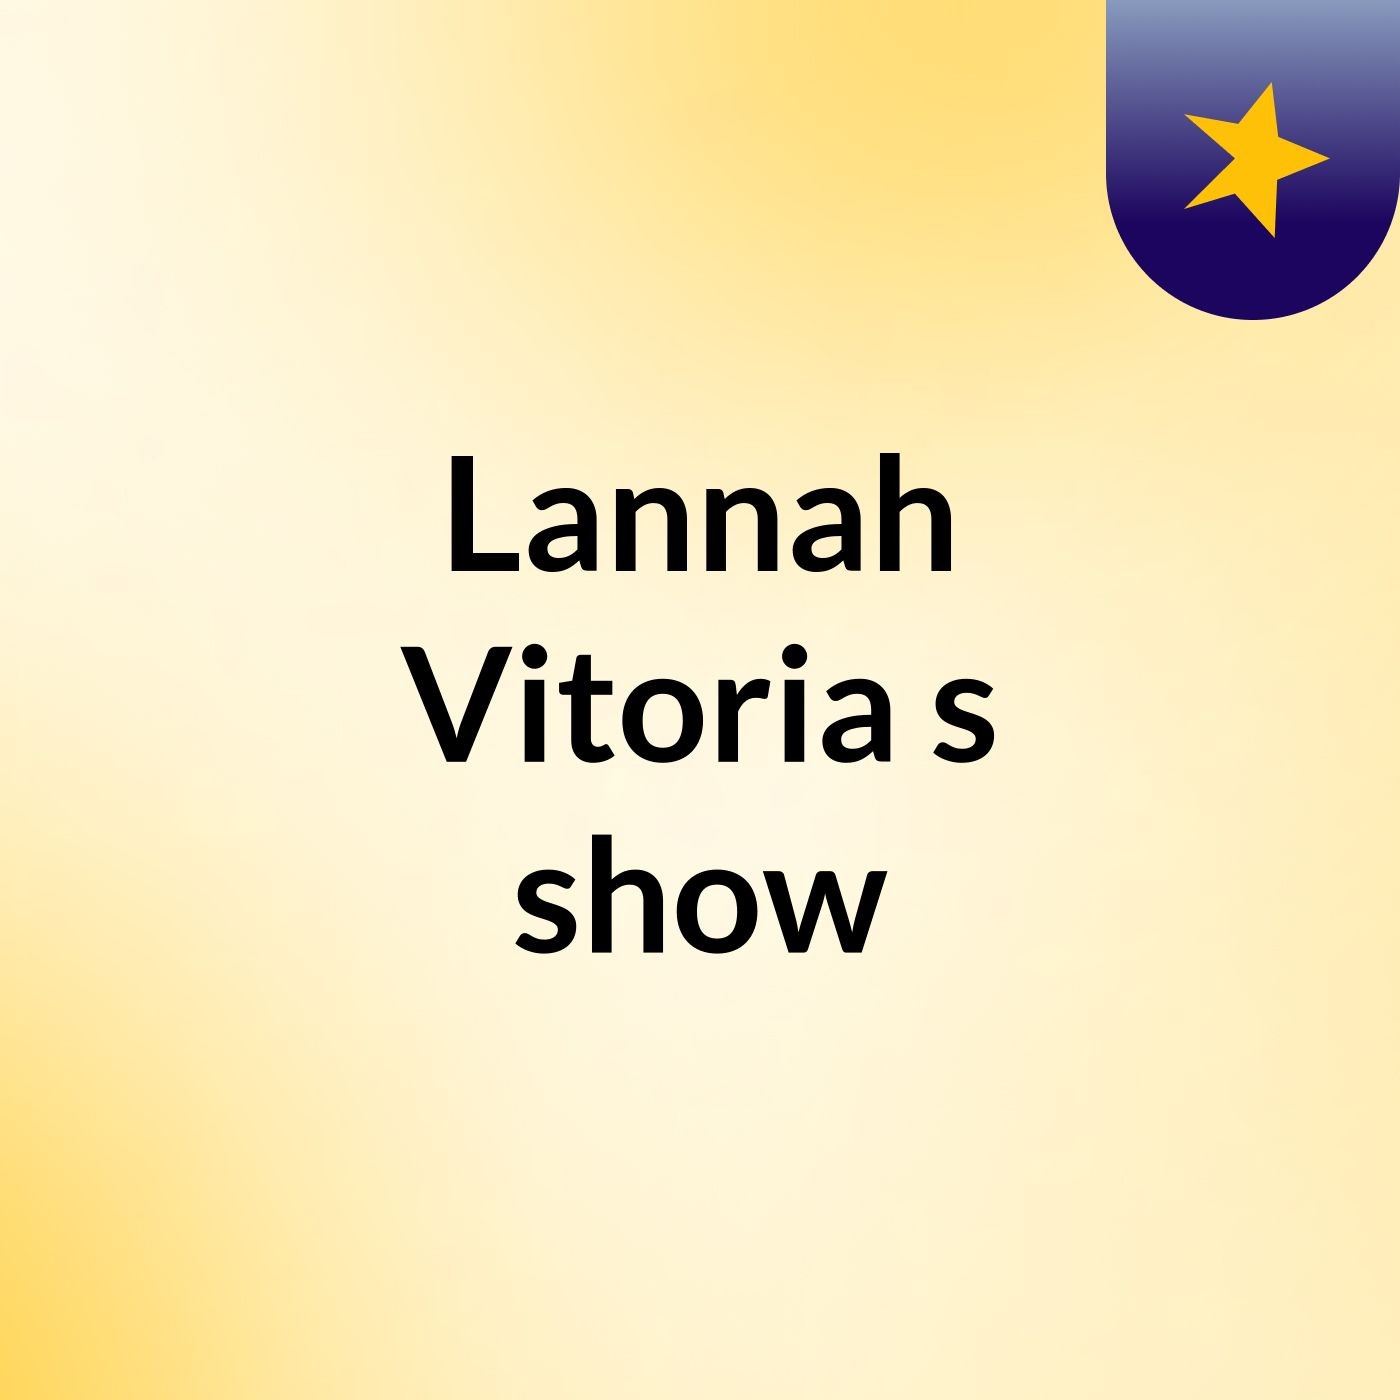 Lannah Vitoria's show